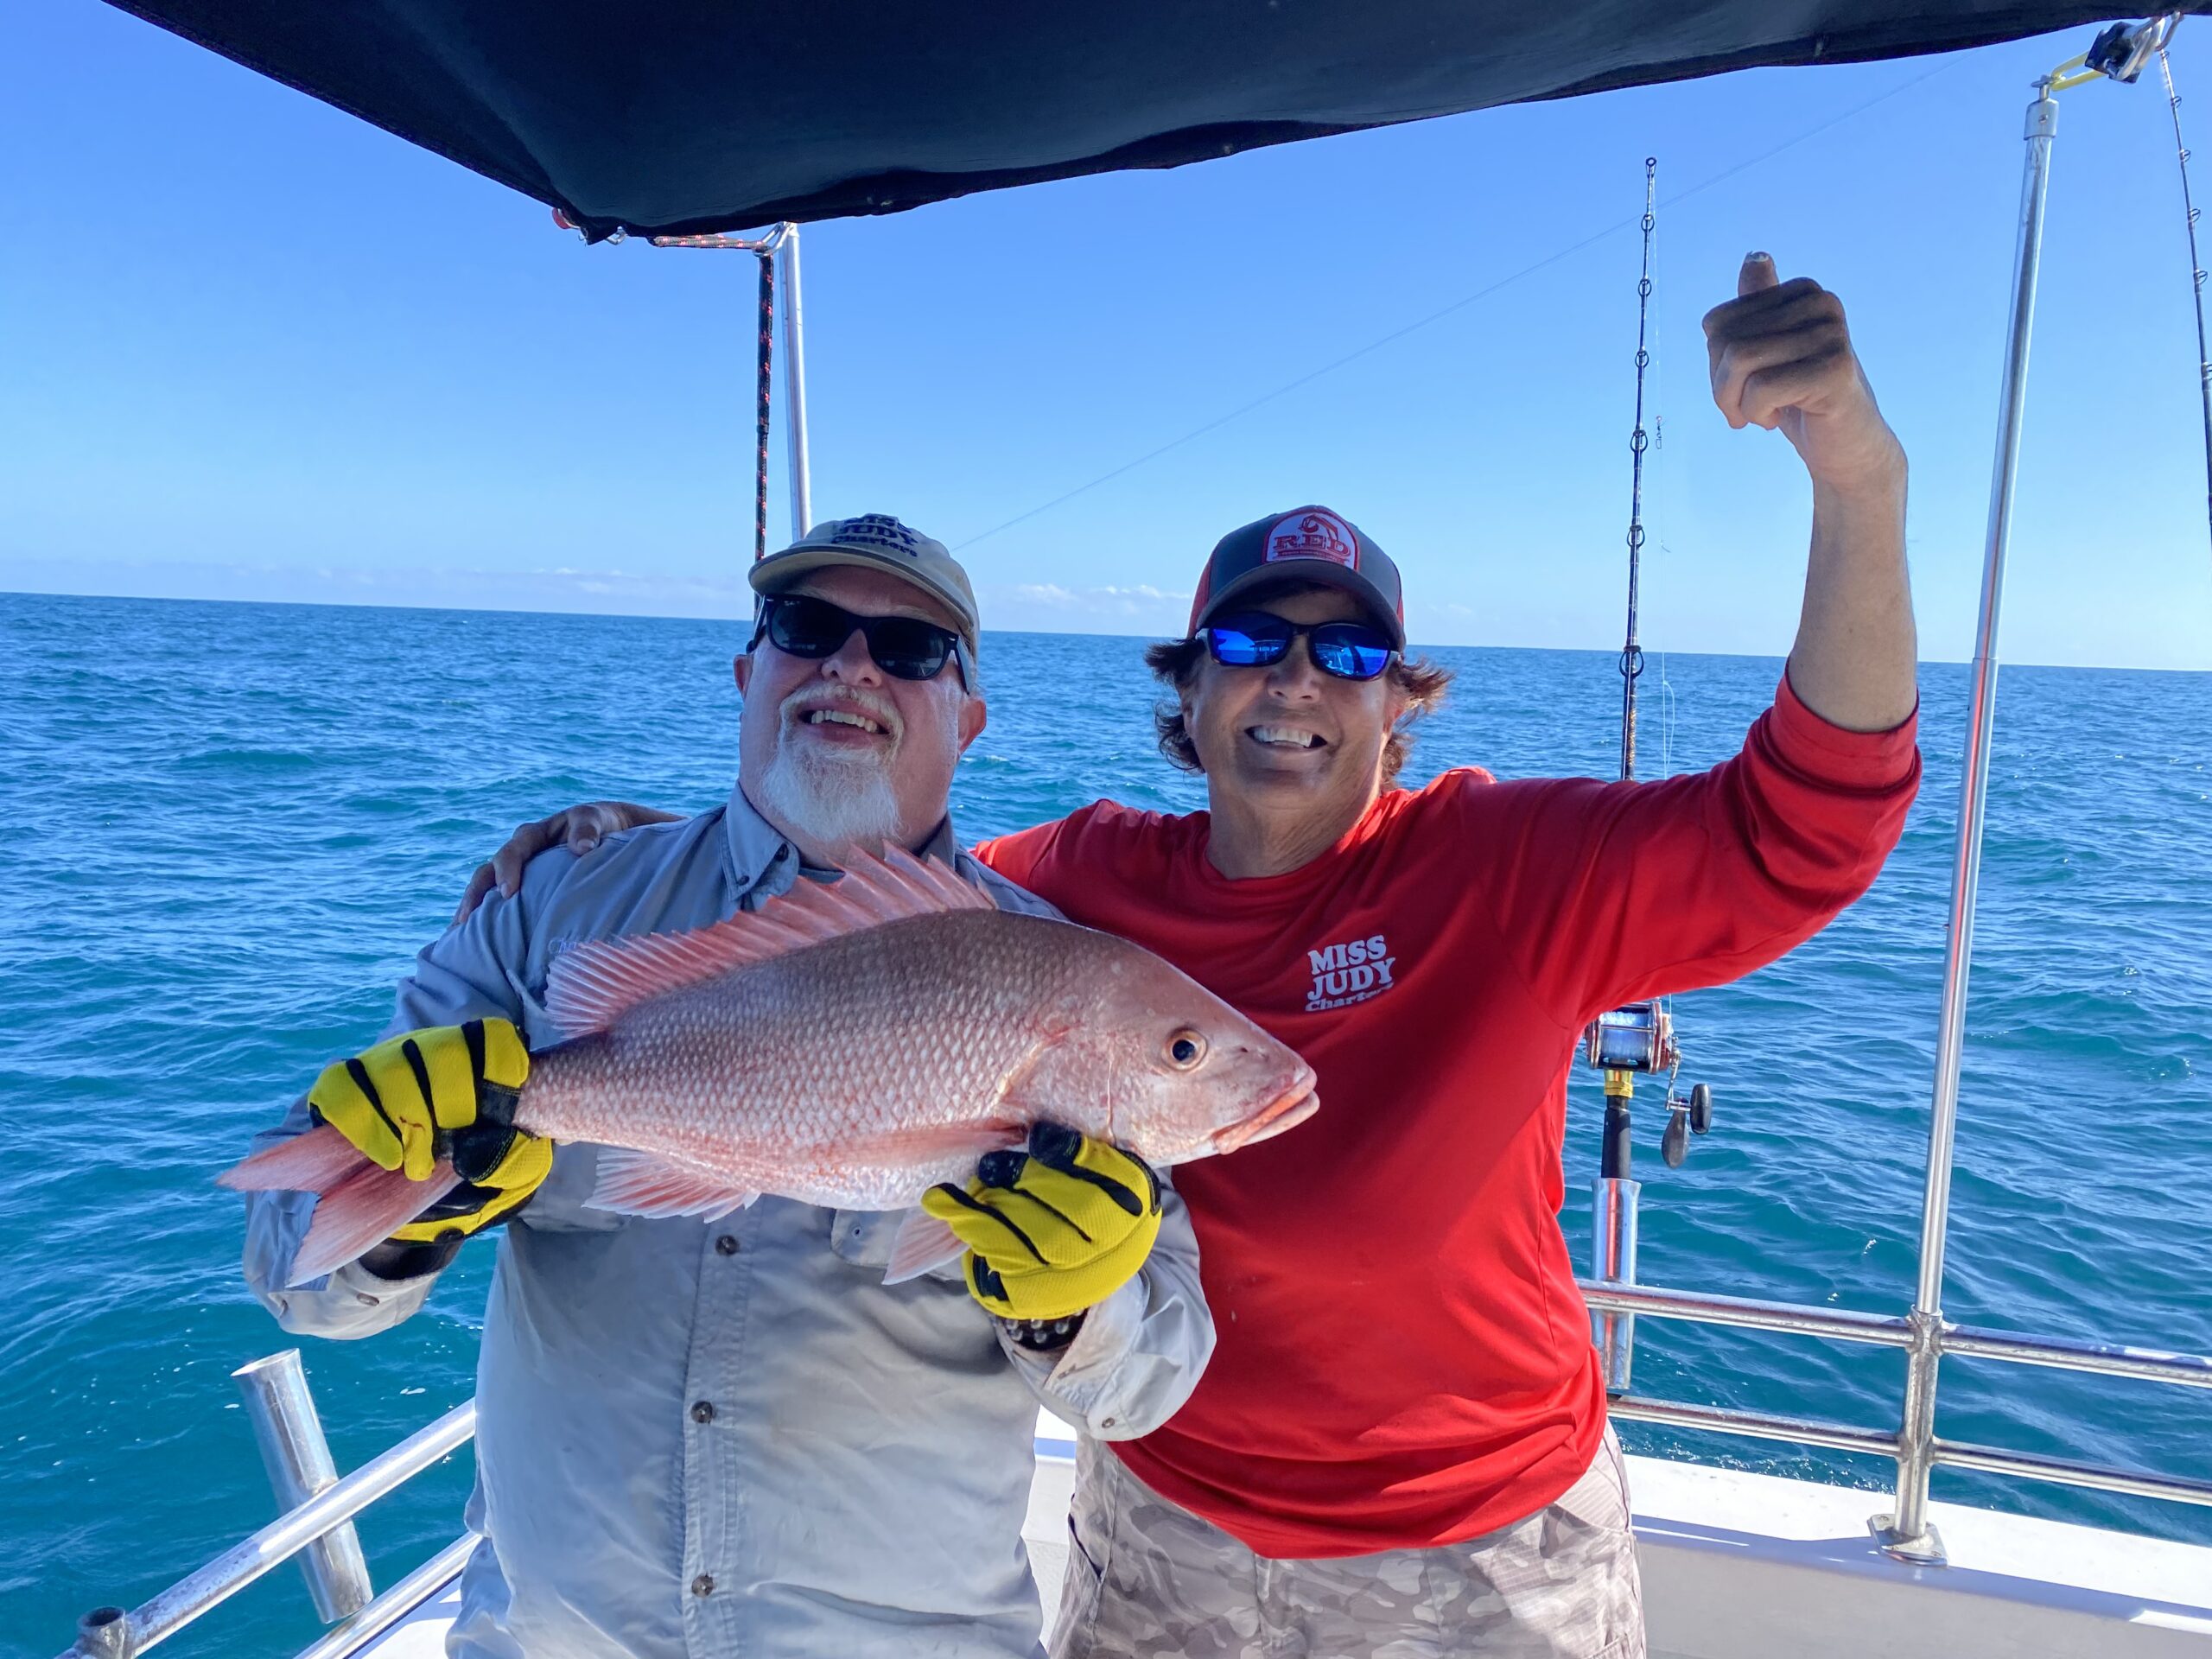 Captain Jambo's Destin Harbor - Florida Fishing Regulations